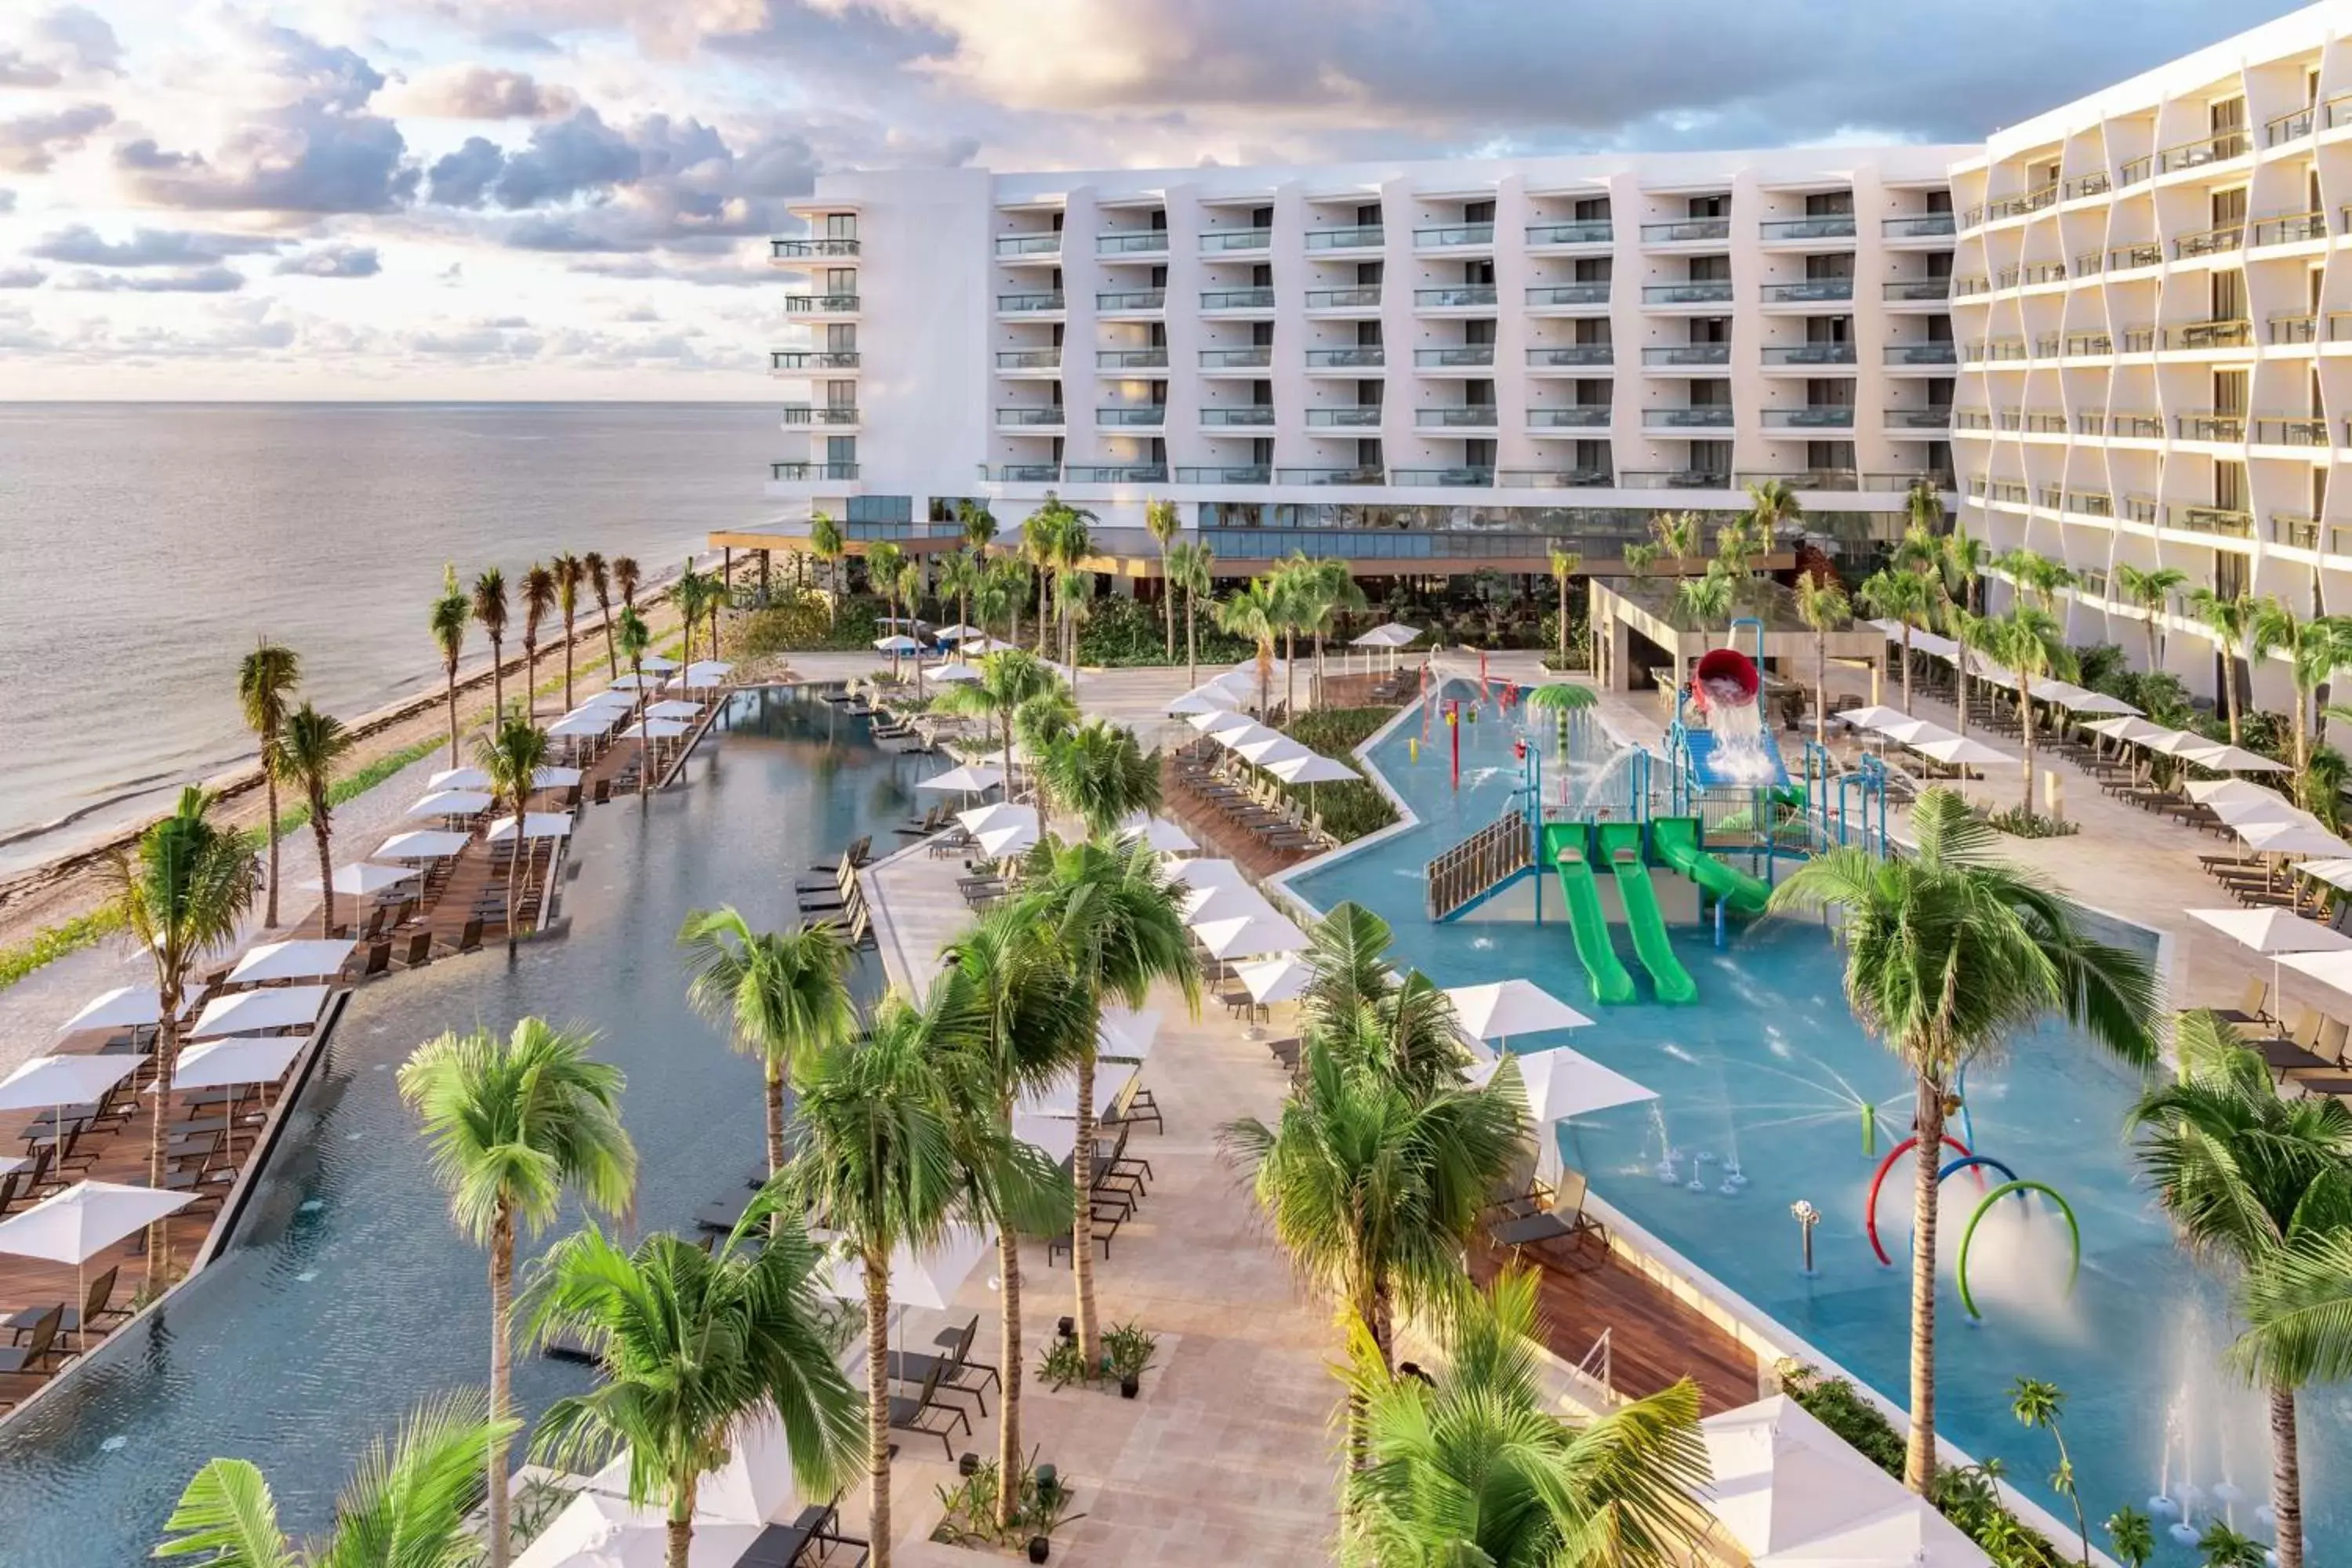 Swimming pool, Pool View in Hilton Cancun, an All-Inclusive Resort